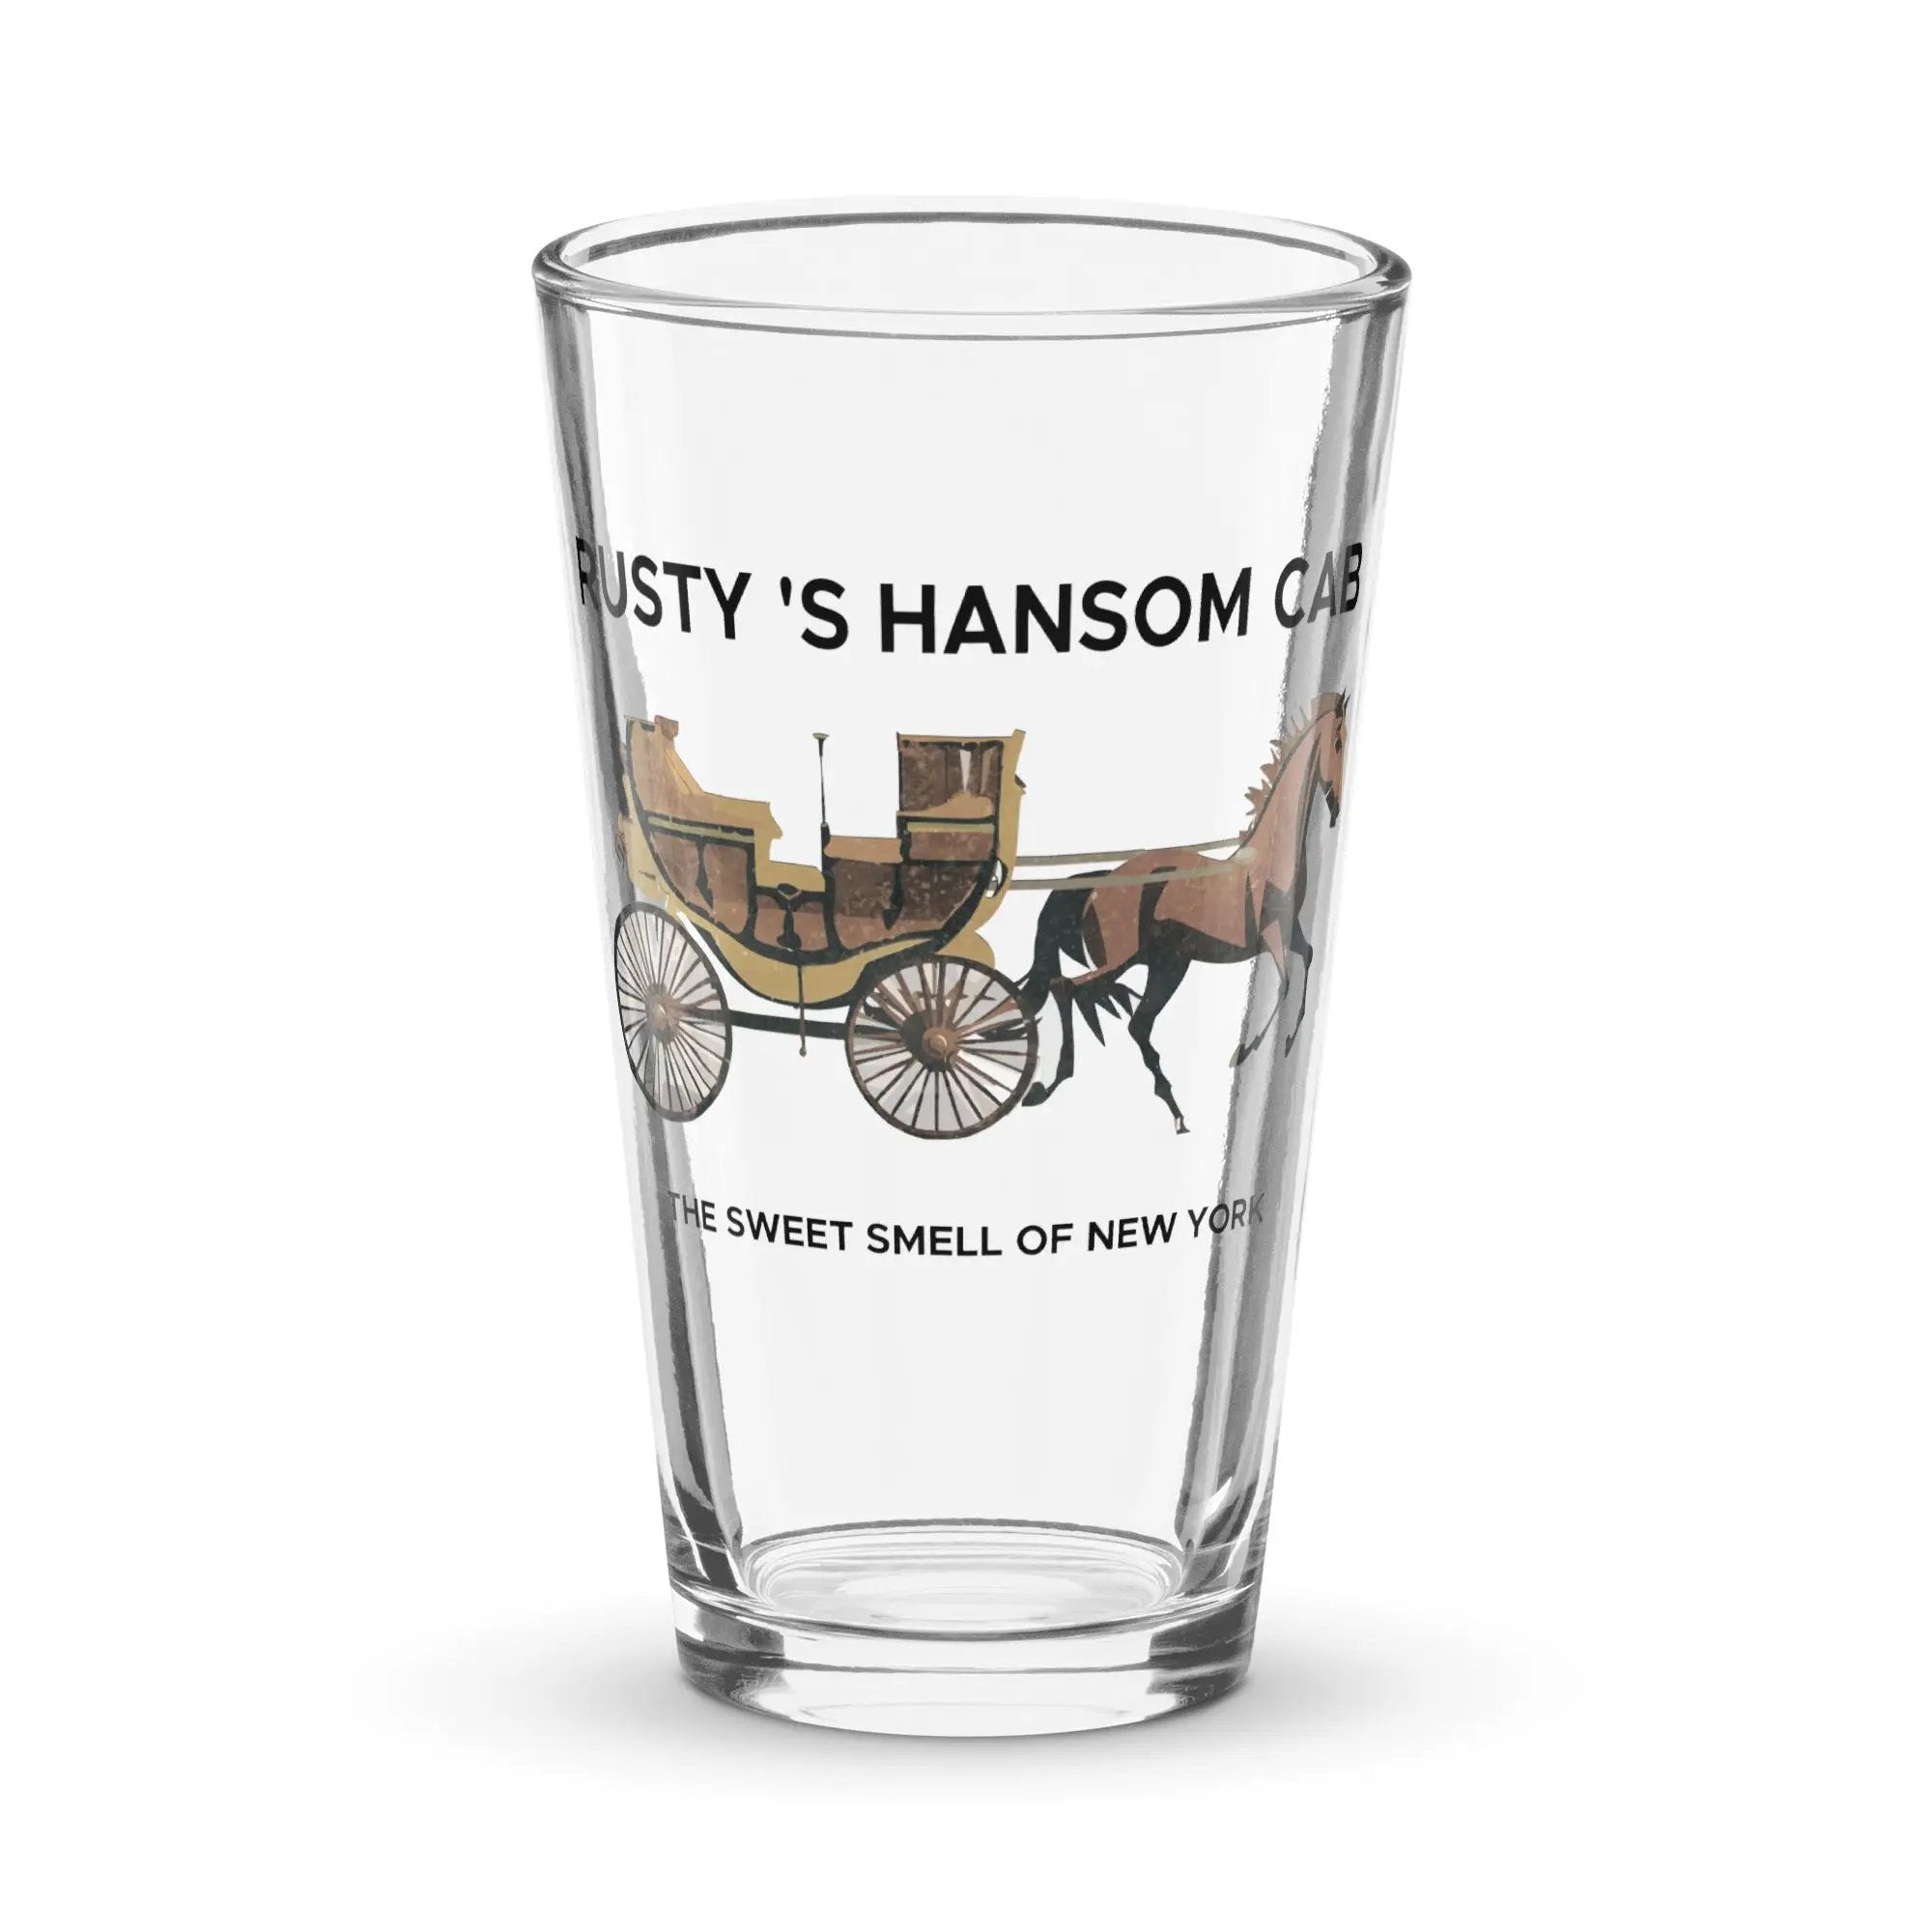 Rusty's Hansom Cab Shaker pint glass